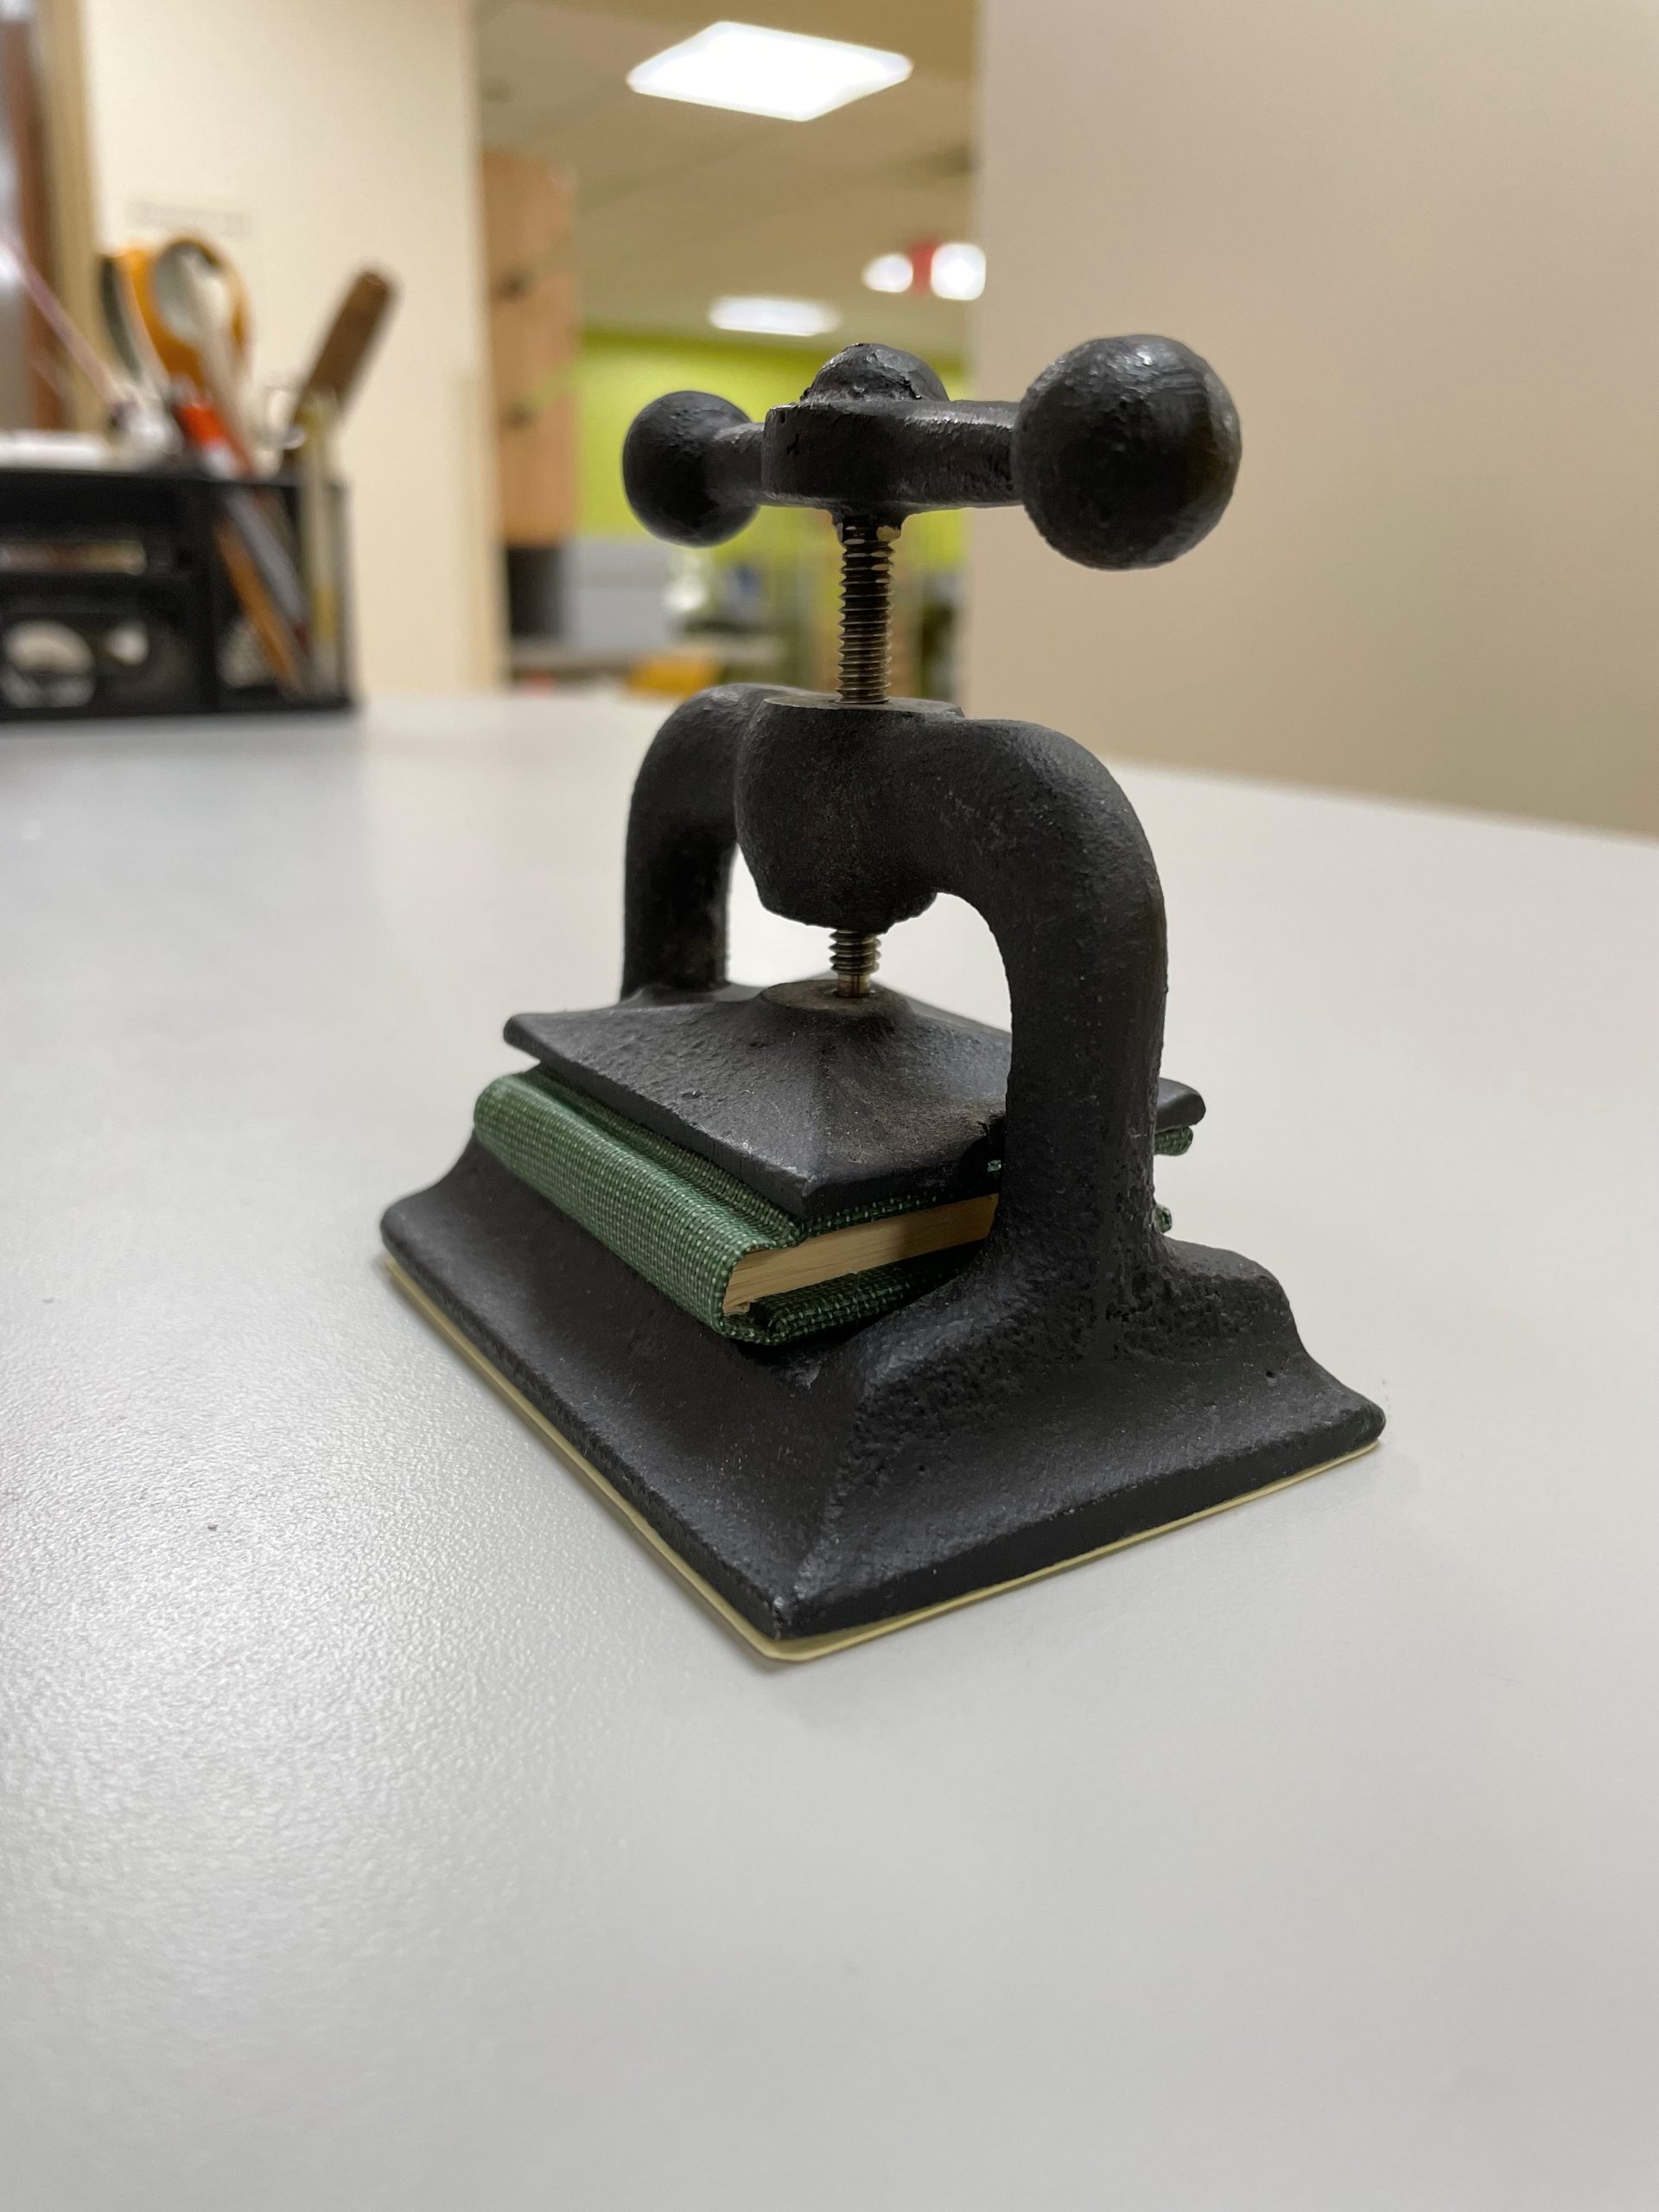 Miniature book and press